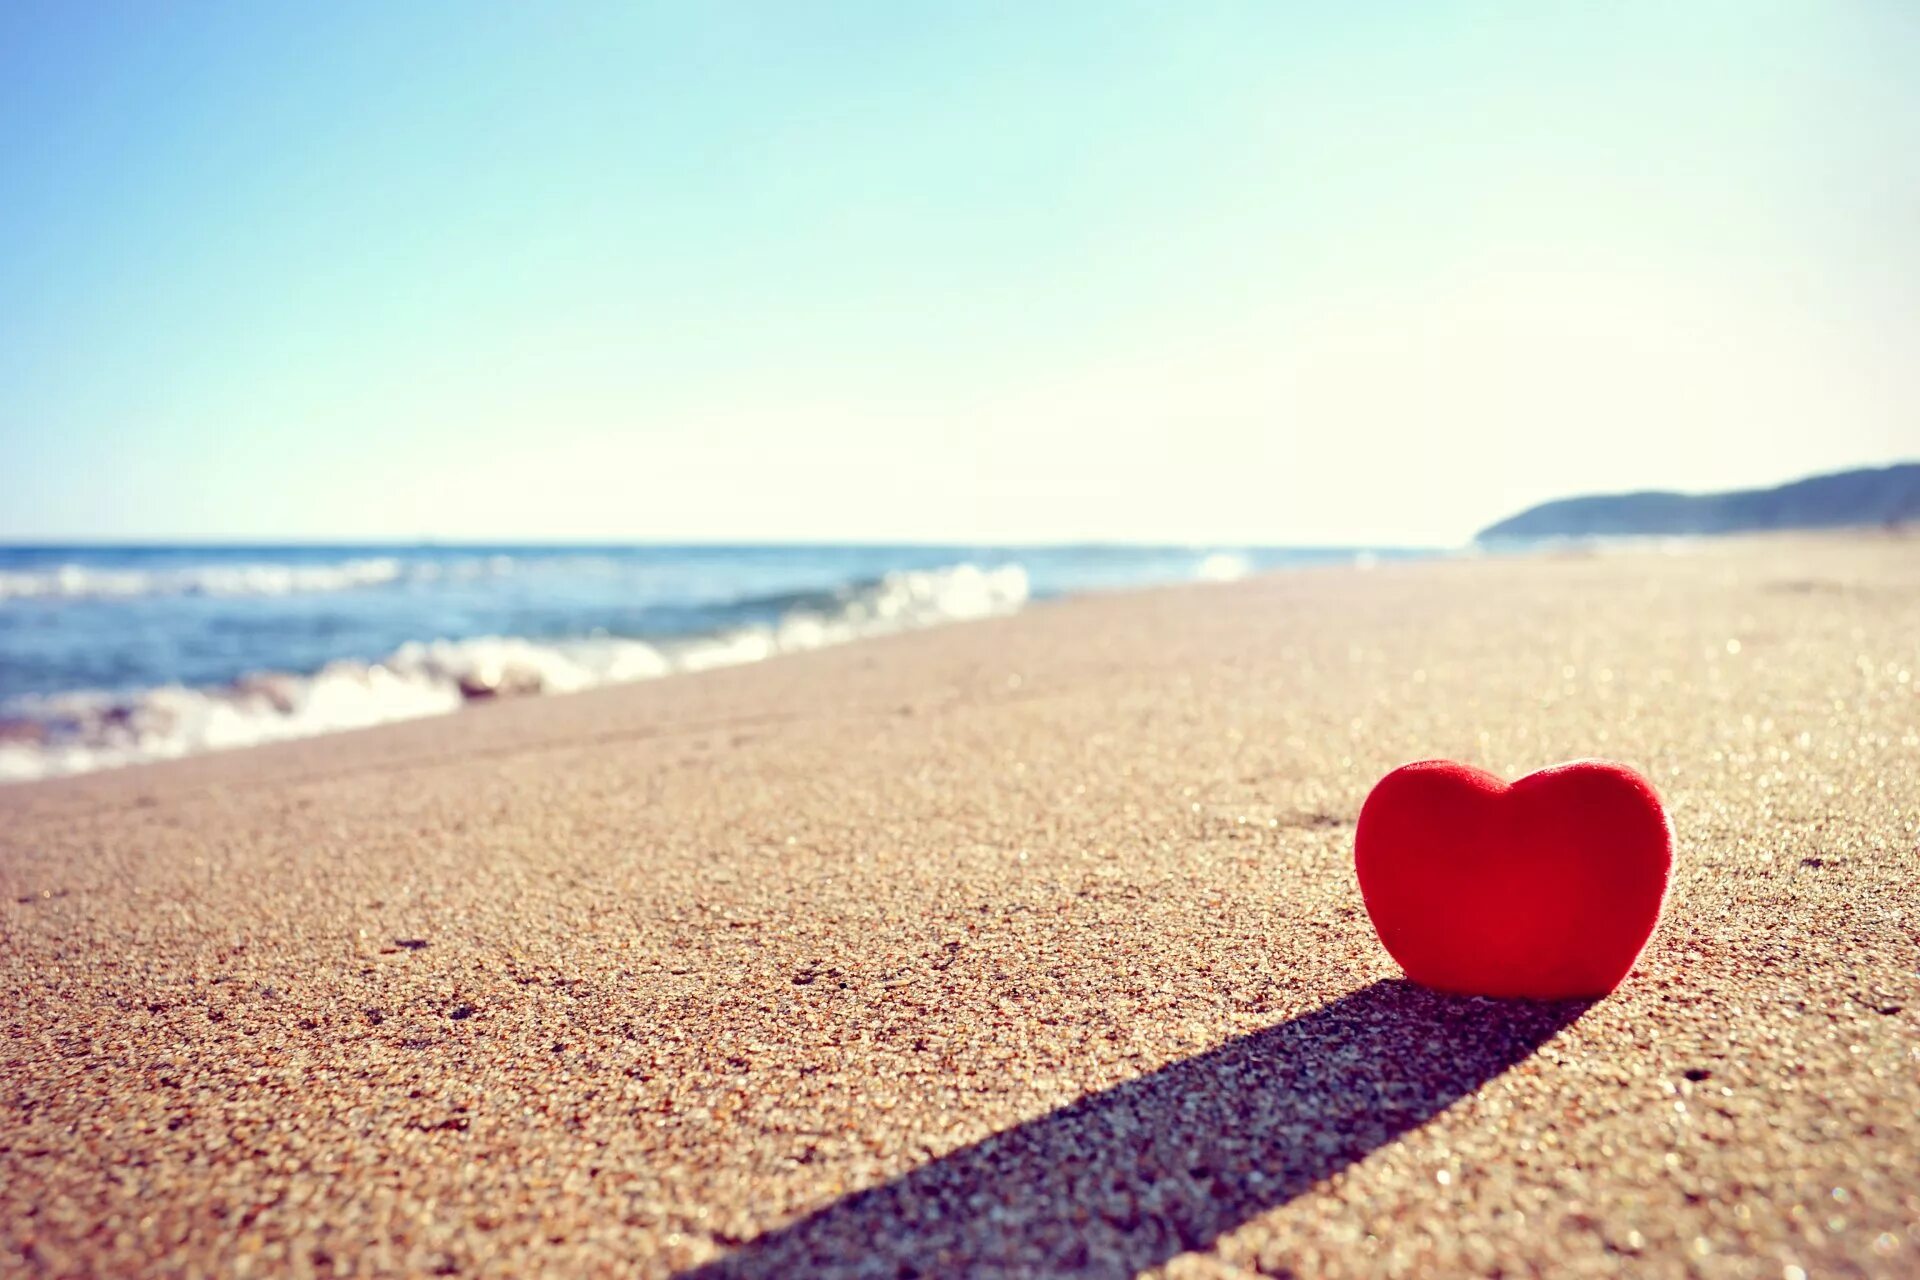 Обои на телефон я люблю тебя. Сердце на пляже. Обои на рабочий стол любовь. Сердце на фоне моря. Сердечко на пляже.